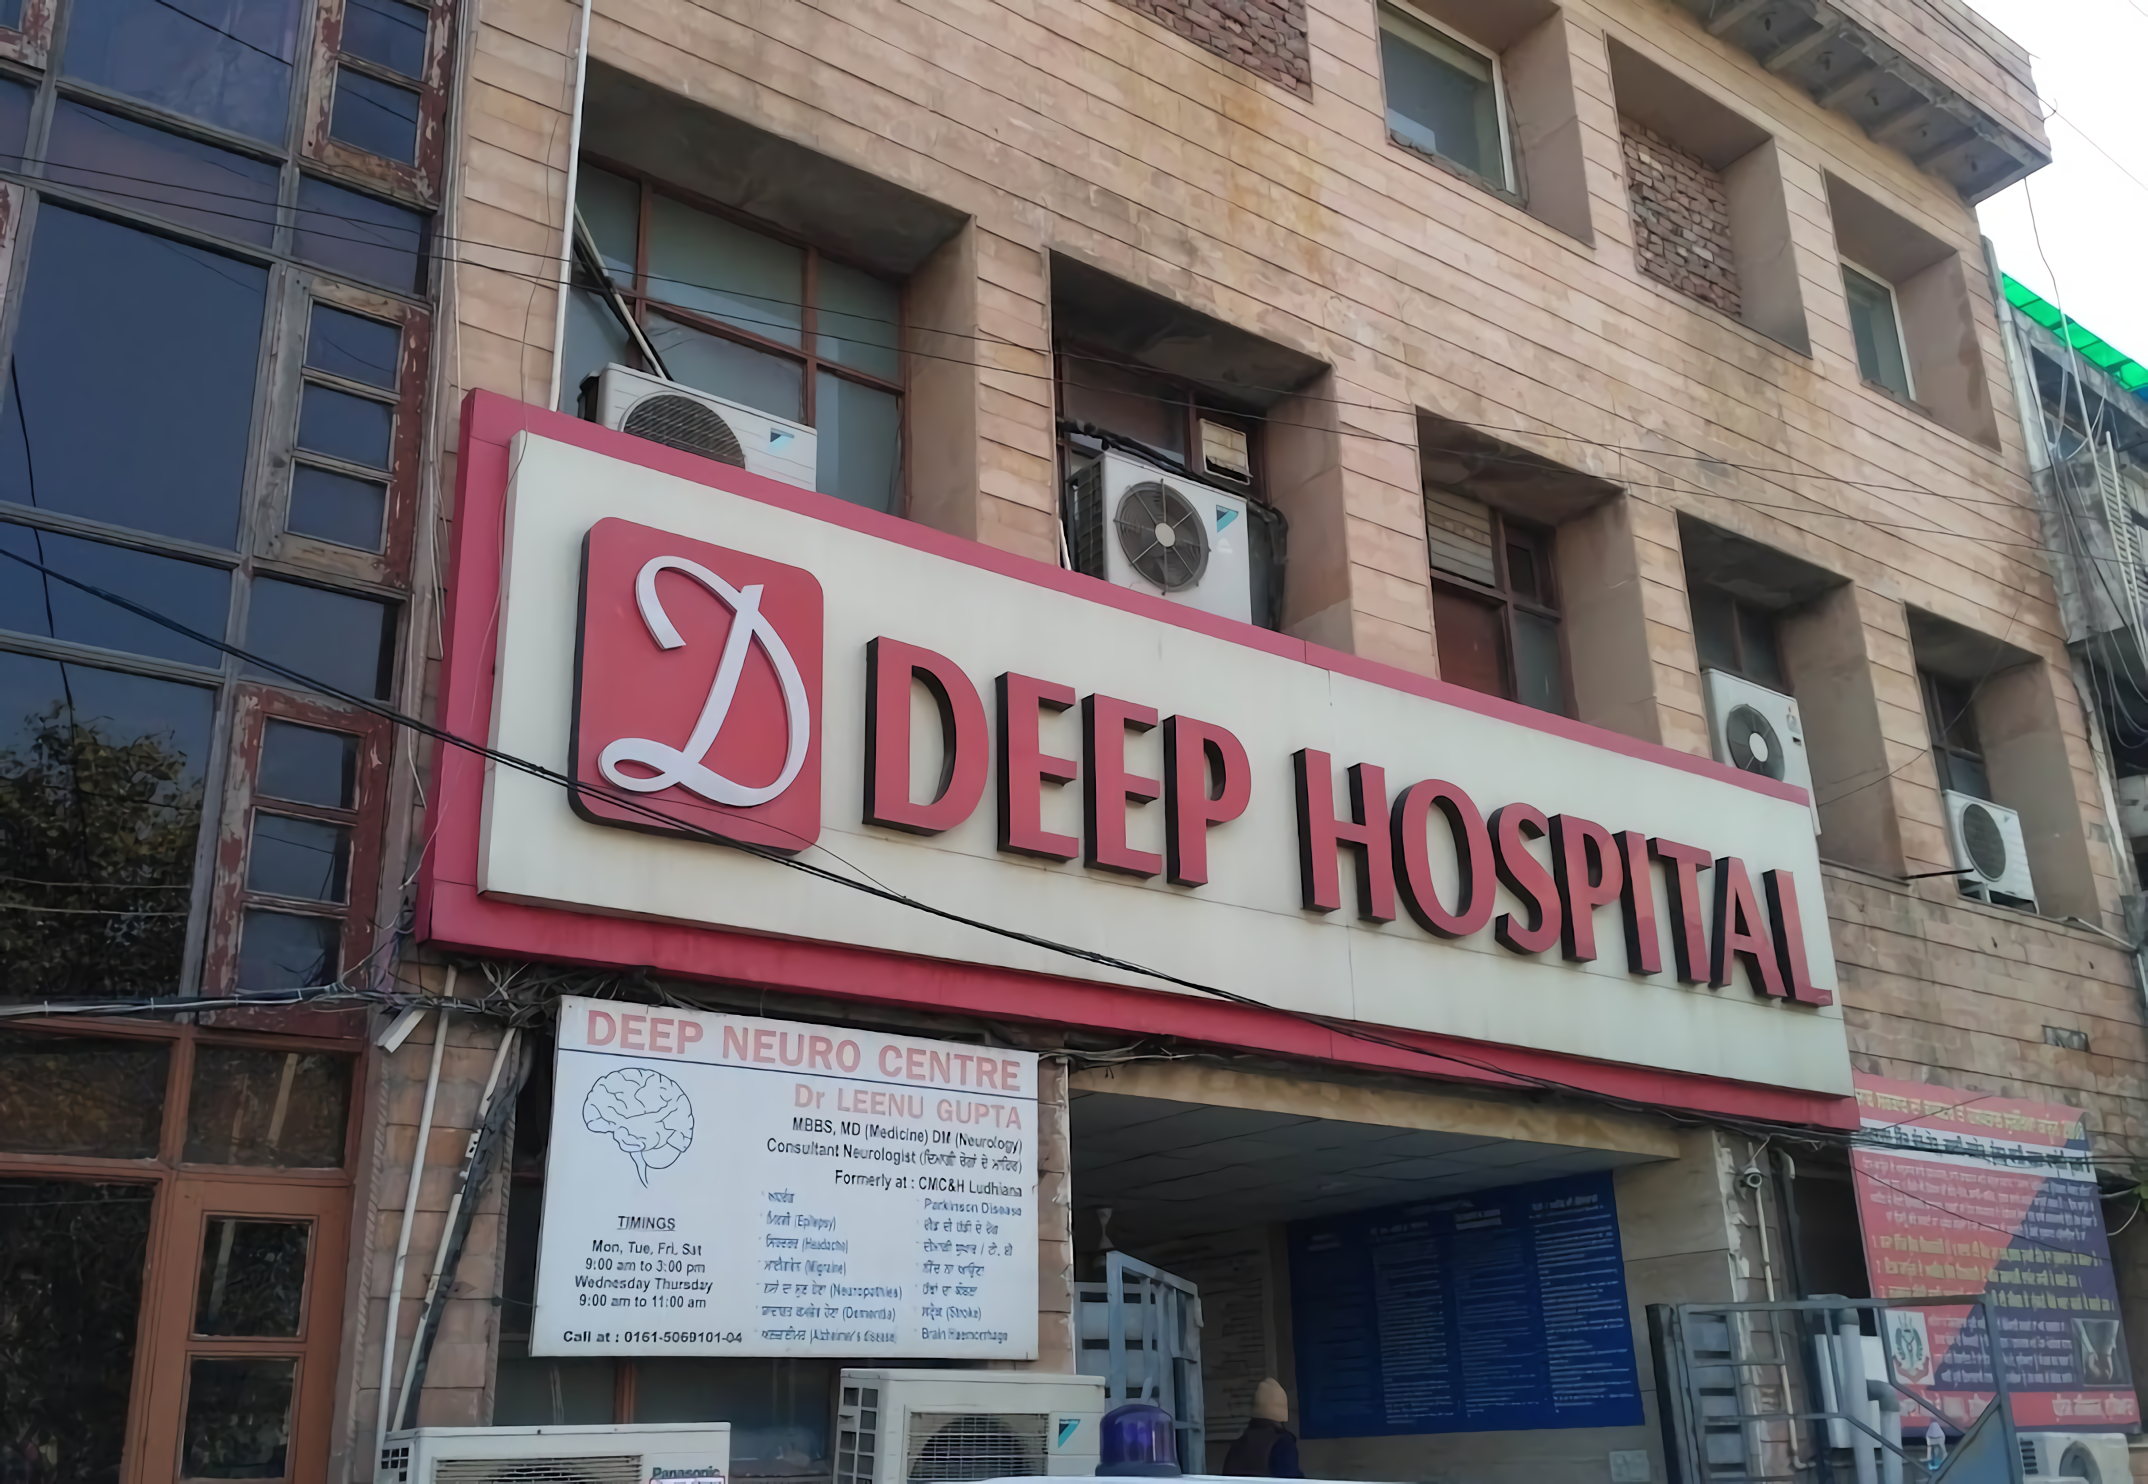 Deep Hospital